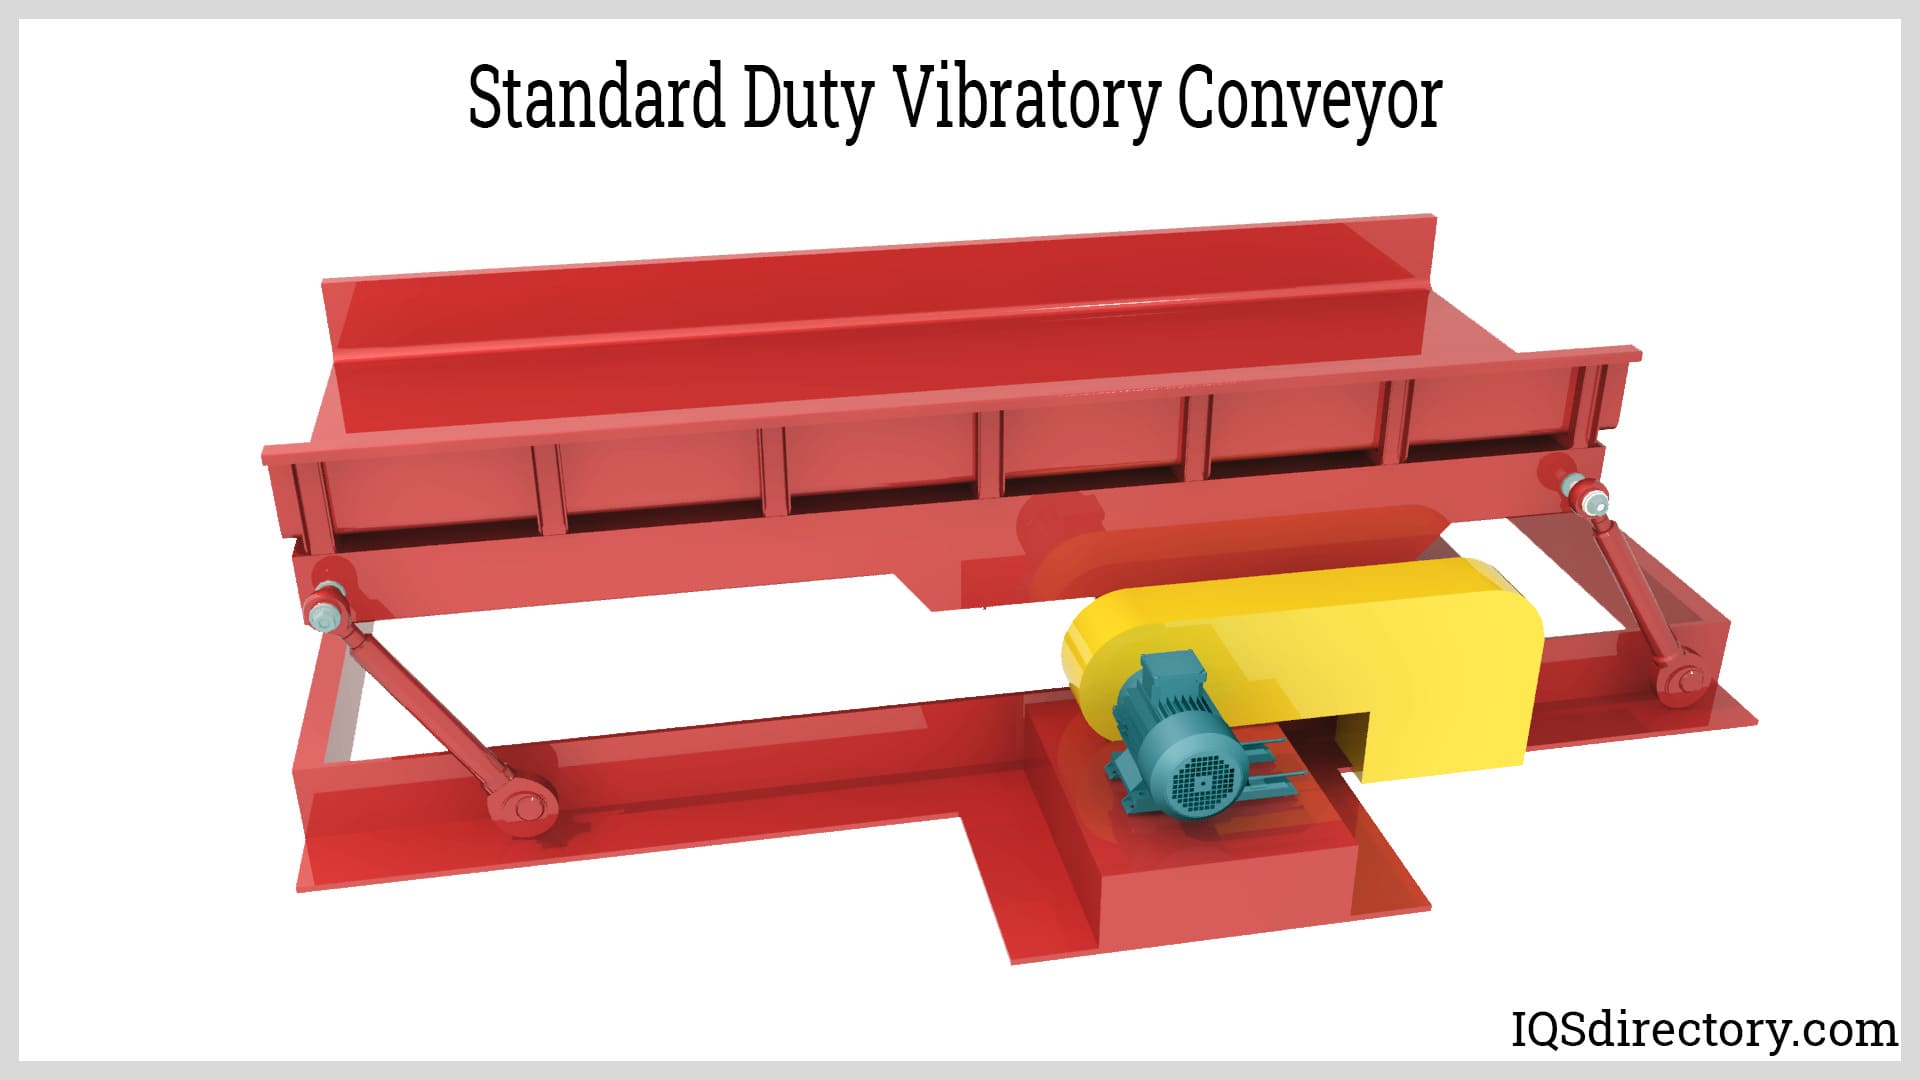 Standard Duty Vibratory Conveyor